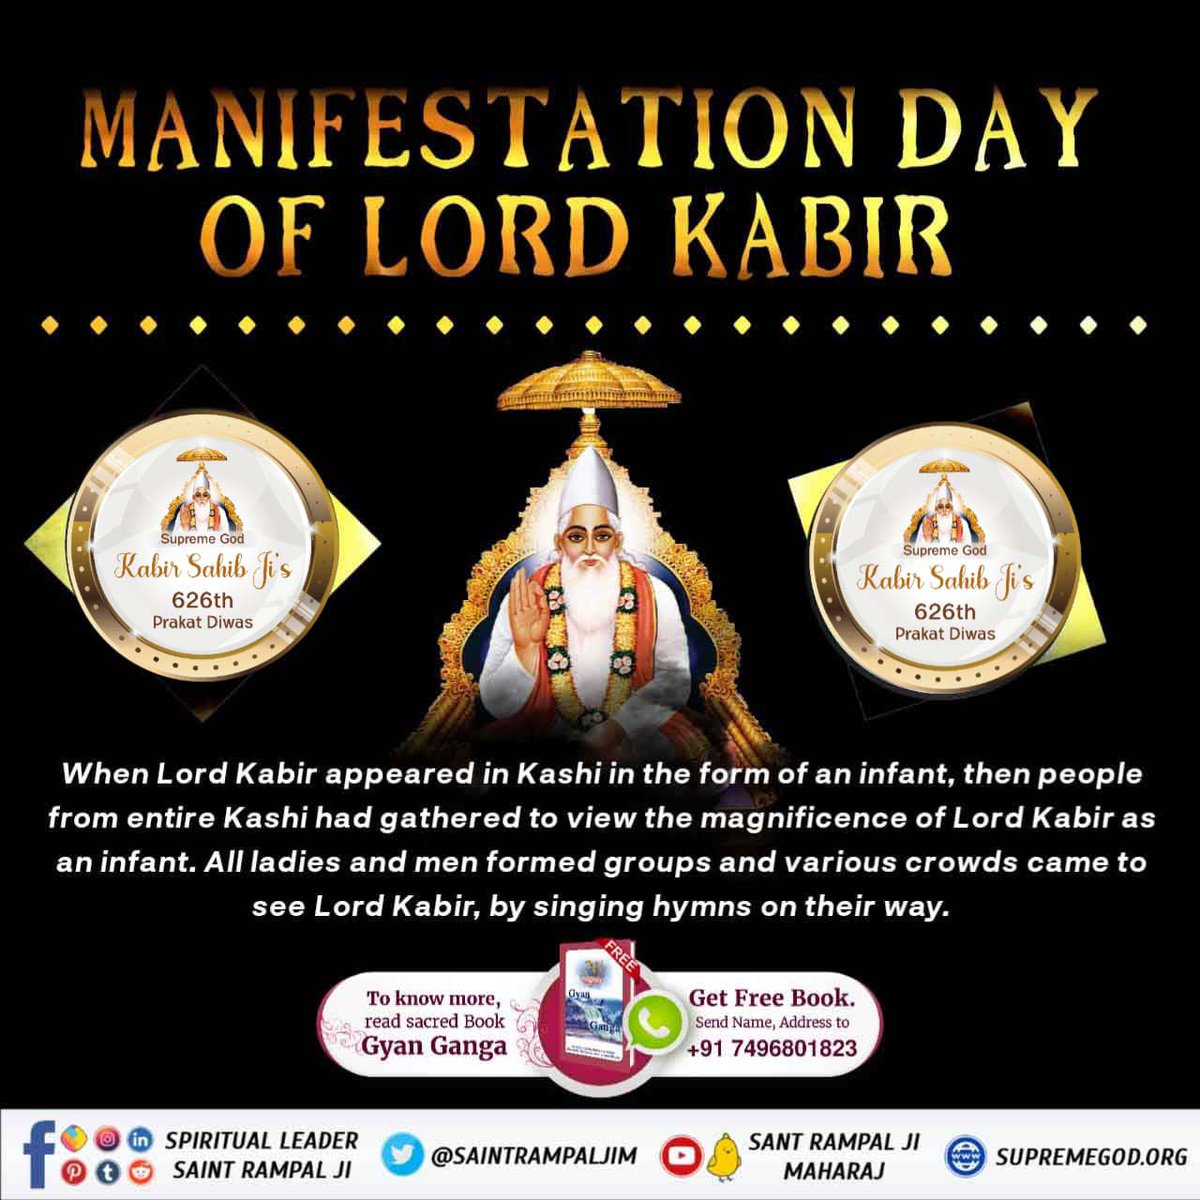 Kabir Sahib Prakat Diwas is observed to celebrate the Prakatya (appearance) of God Kabir nearly 600 years ago in Kashi, Uttar Pradesh in India.
#कबीरजी_का_कलयुगमें_प्राकट्य
3 Days Left Kabir Prakat Diwas